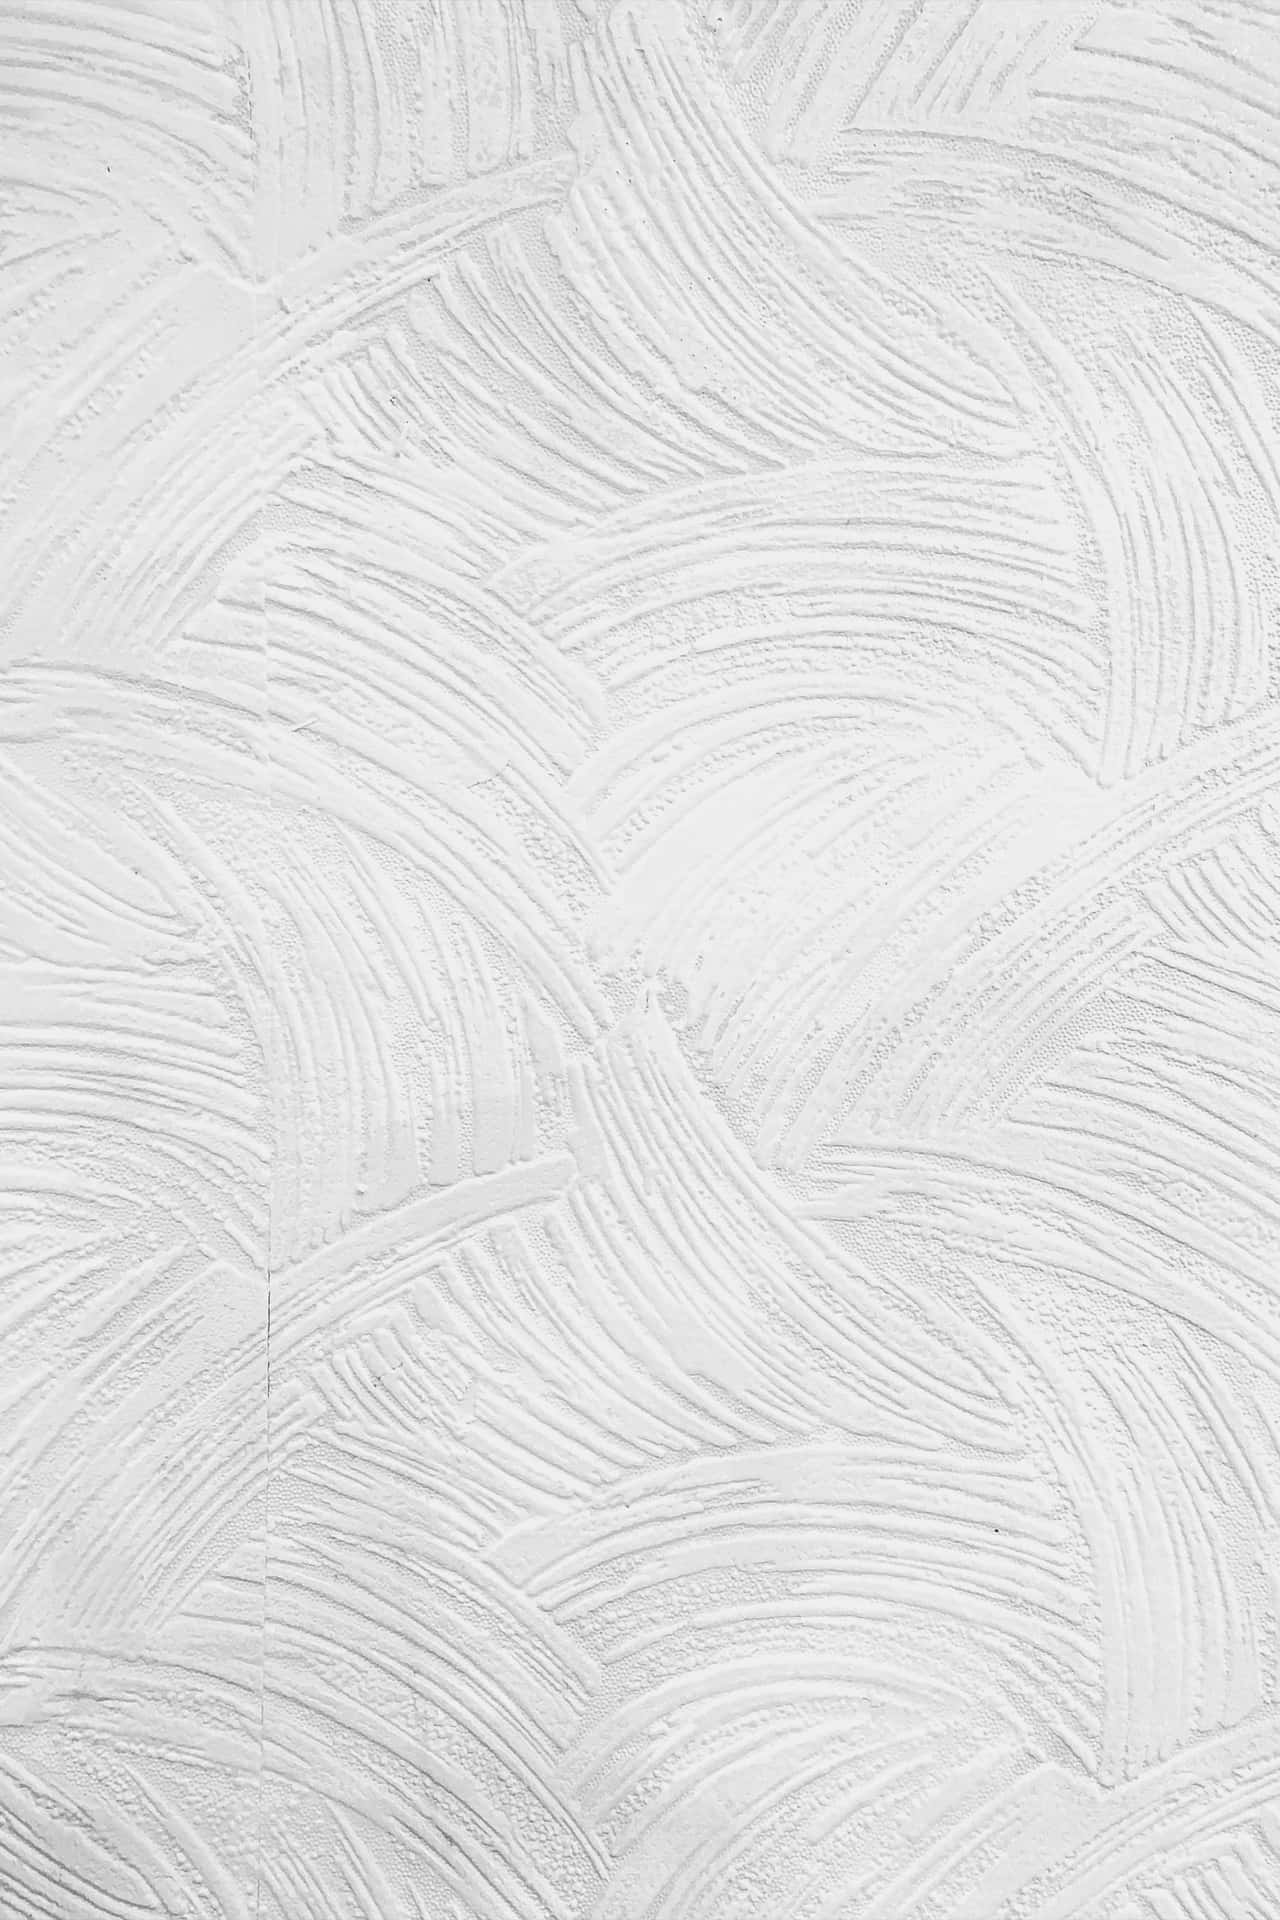 Captivating Simplicity: Pure White Venus Texture Background